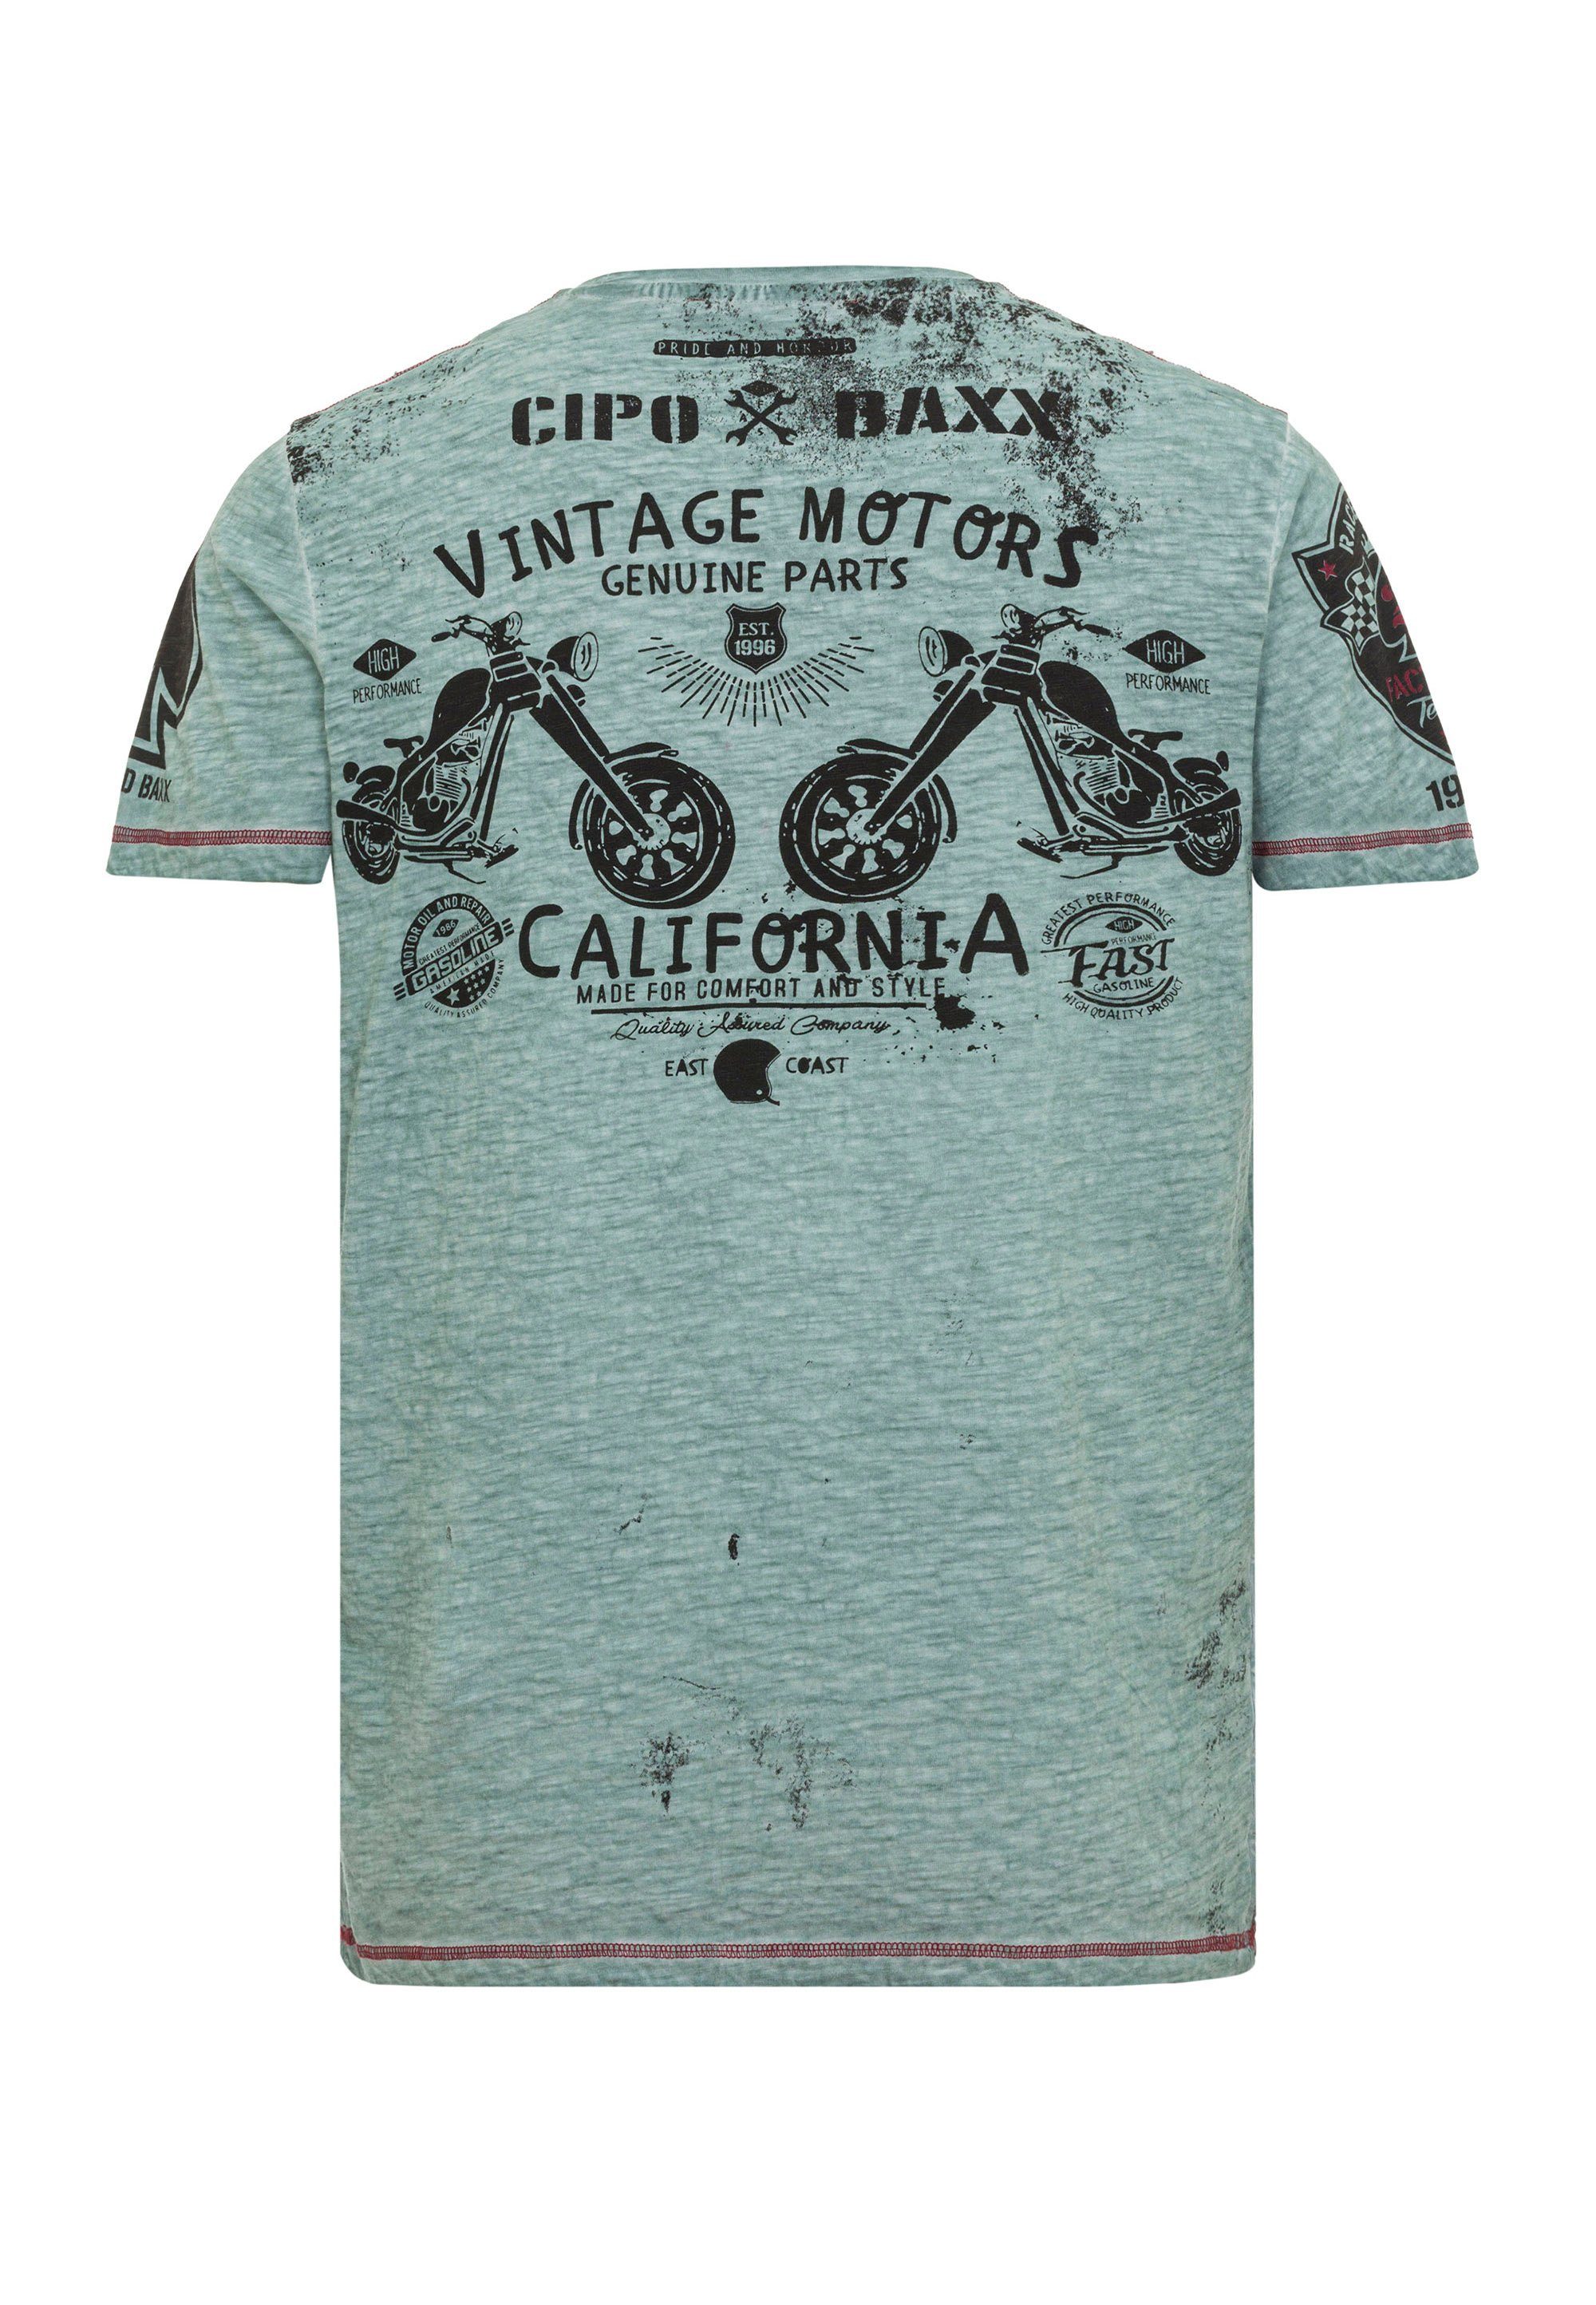 Cipo & Baxx T-Shirt mint VintageLook im